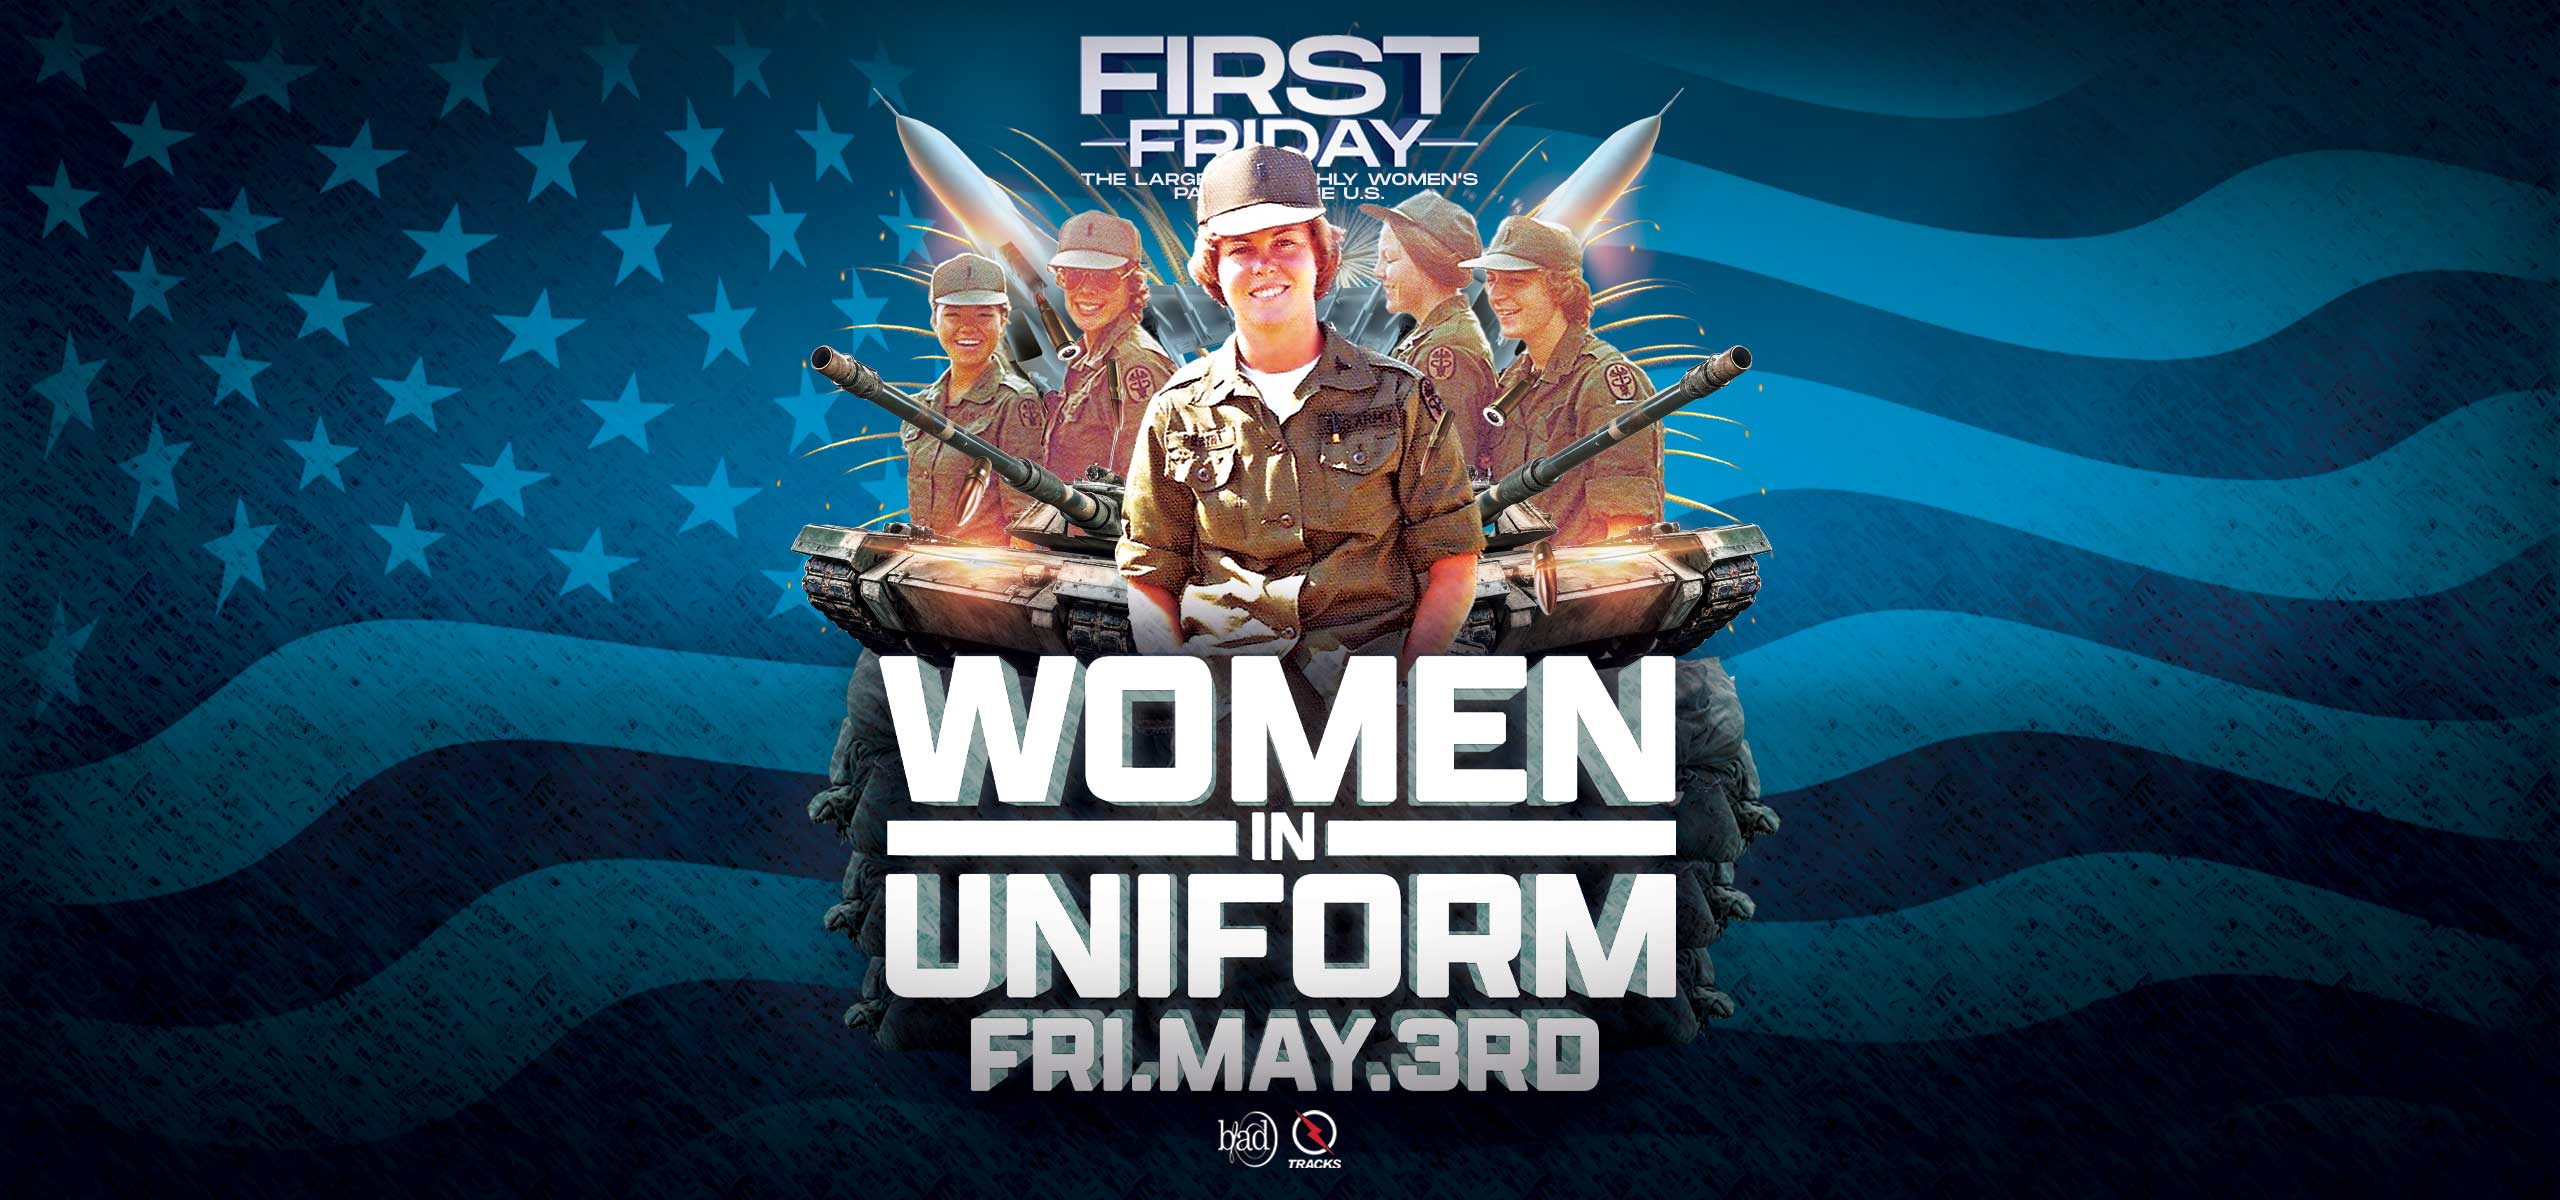 First Friday: Women In Uniform